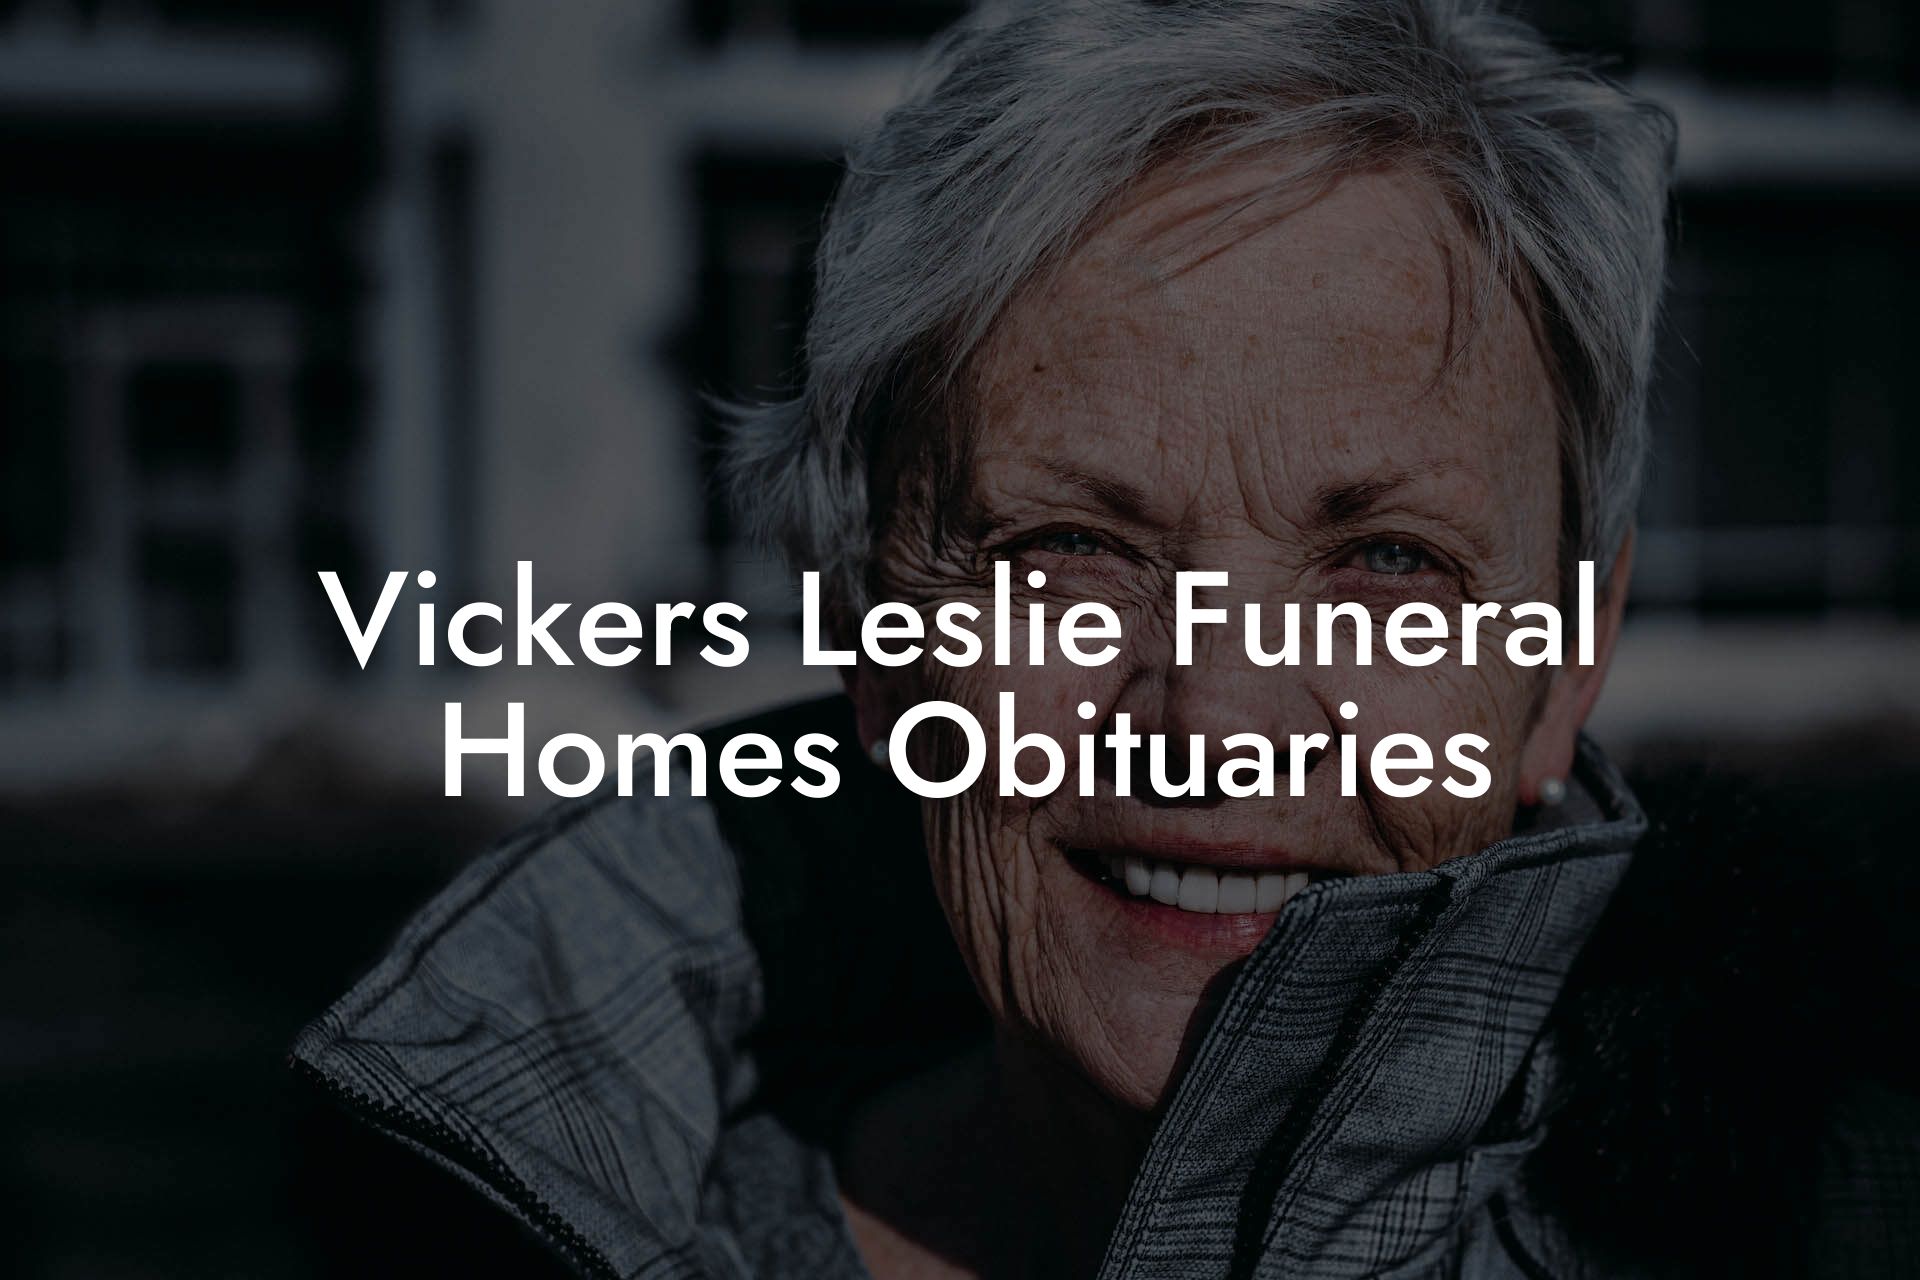 Vickers Leslie Funeral Homes Obituaries